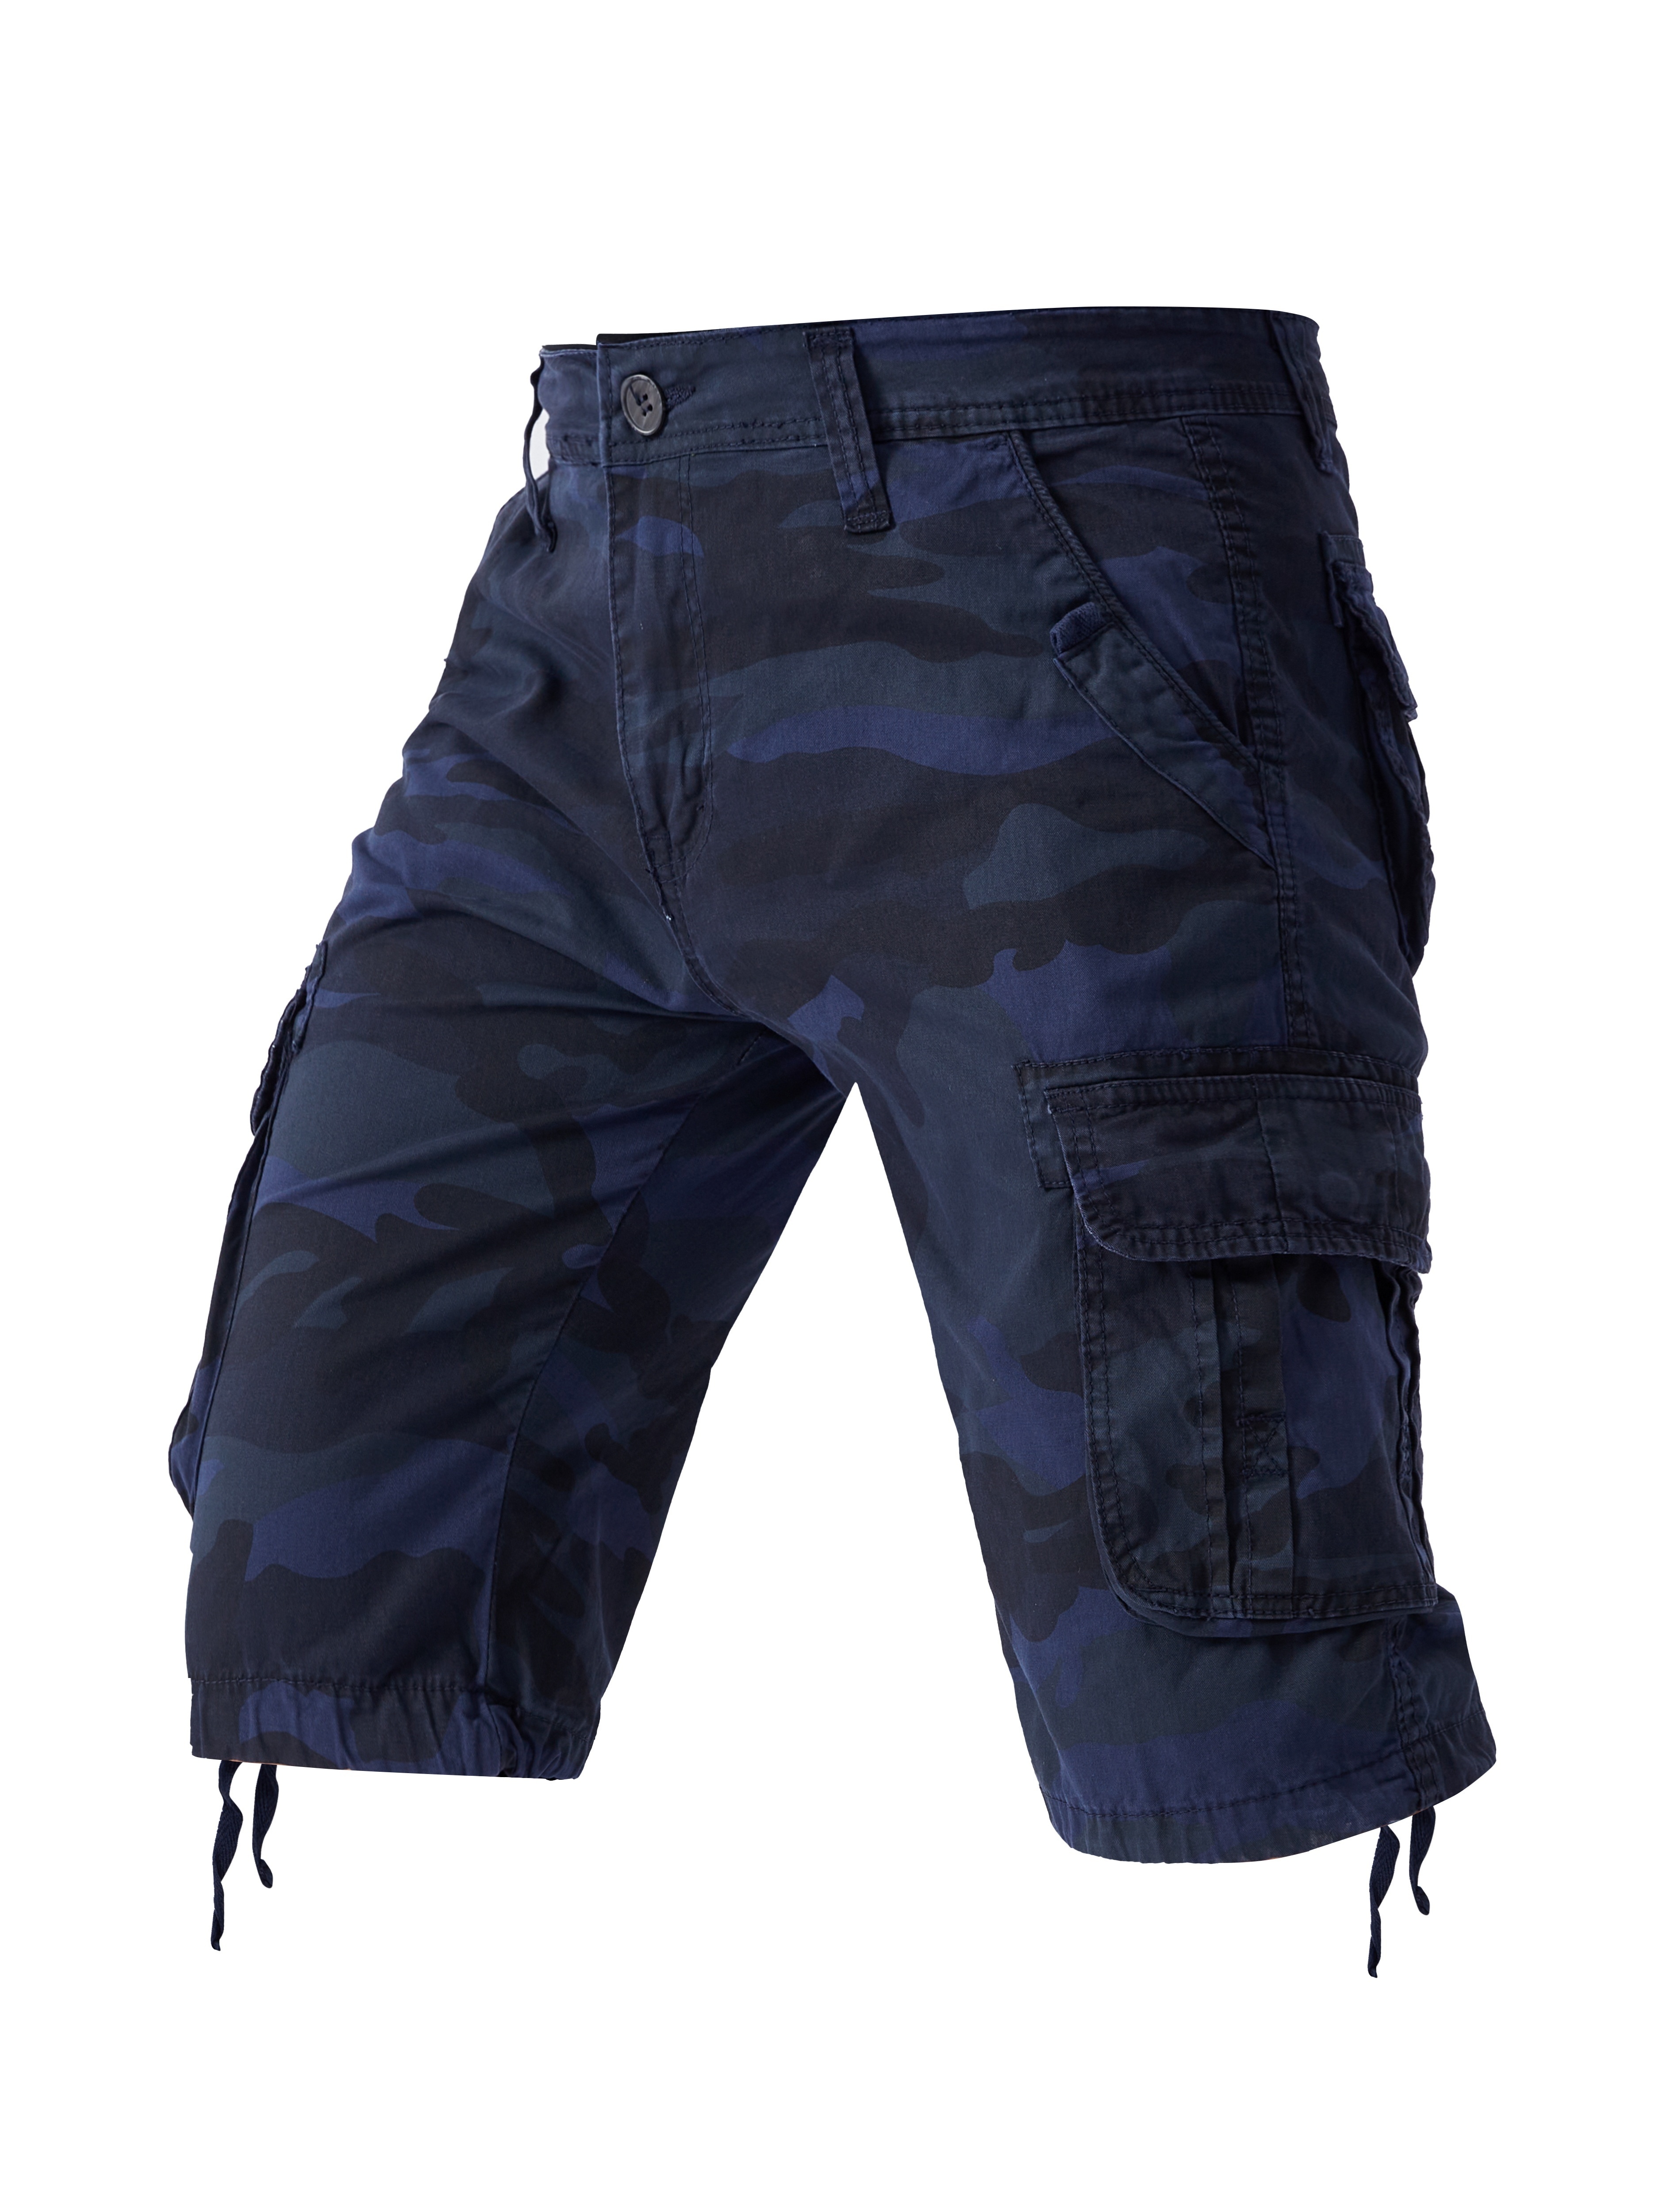 Shop Temu For Men's Cargo Pants - Free Returns Within 90 Days - Temu